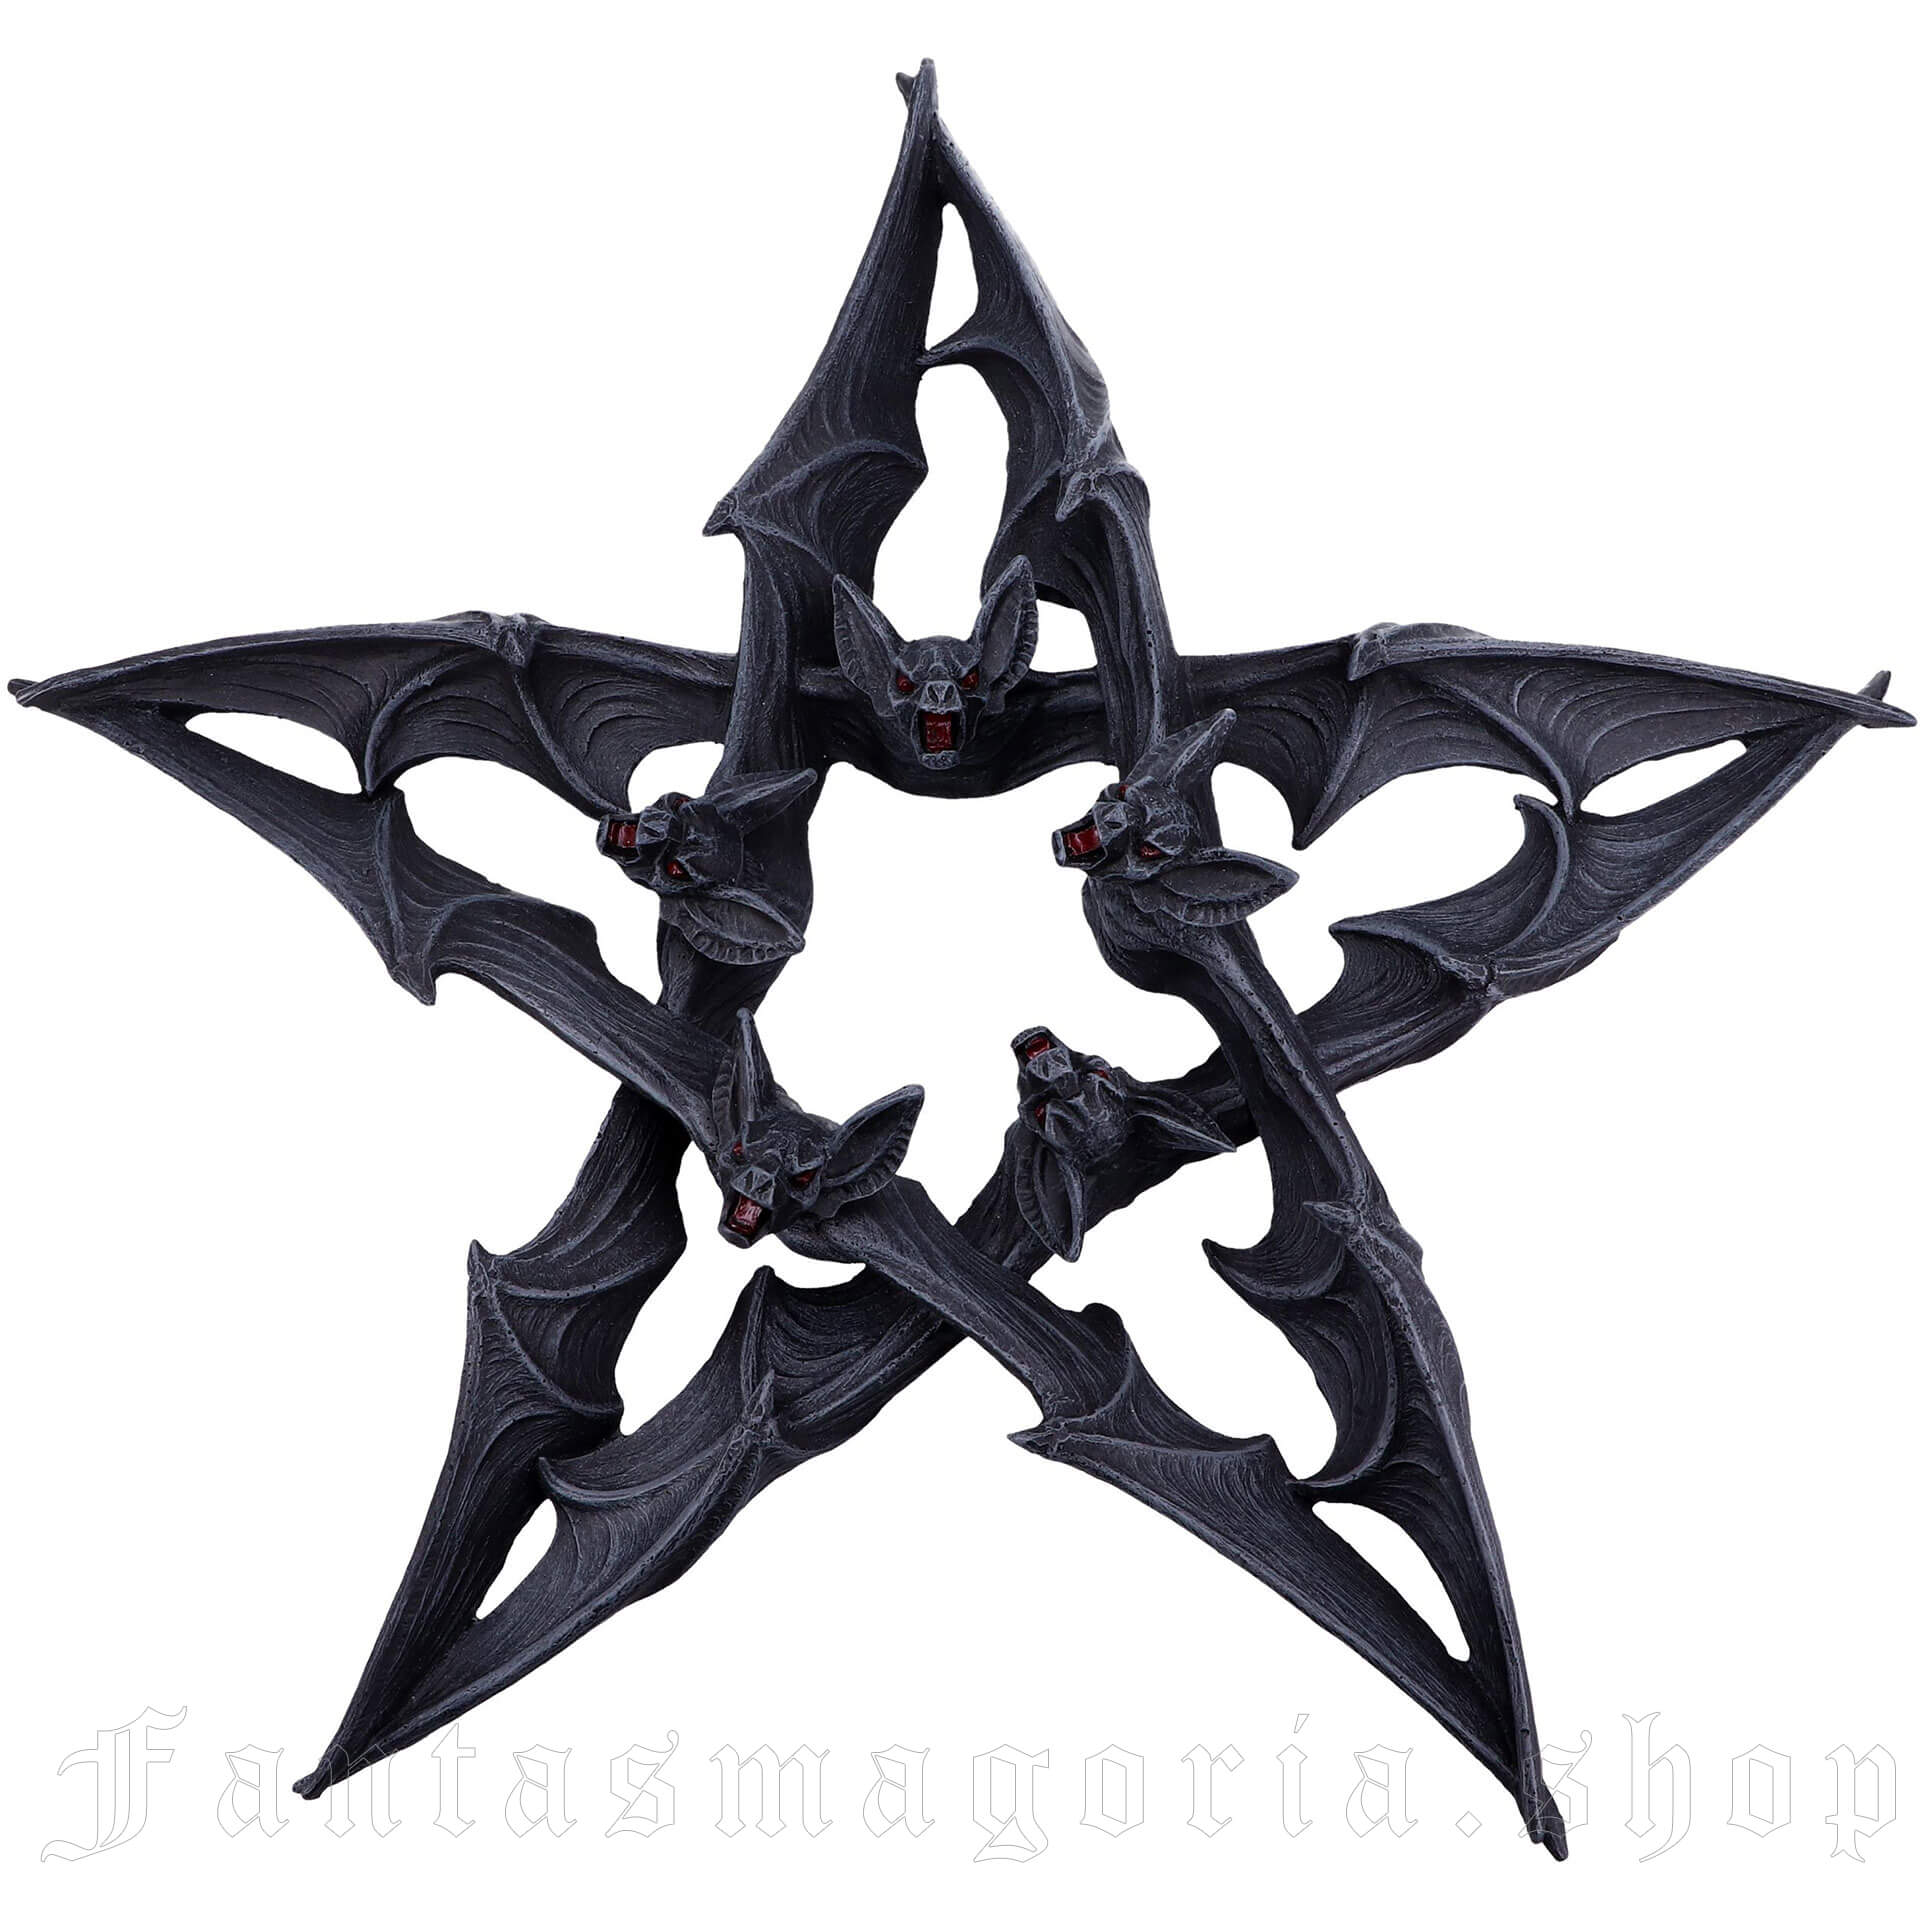 Aged Pentagram Candlesticks  Nemesis Now Wholesale Giftware